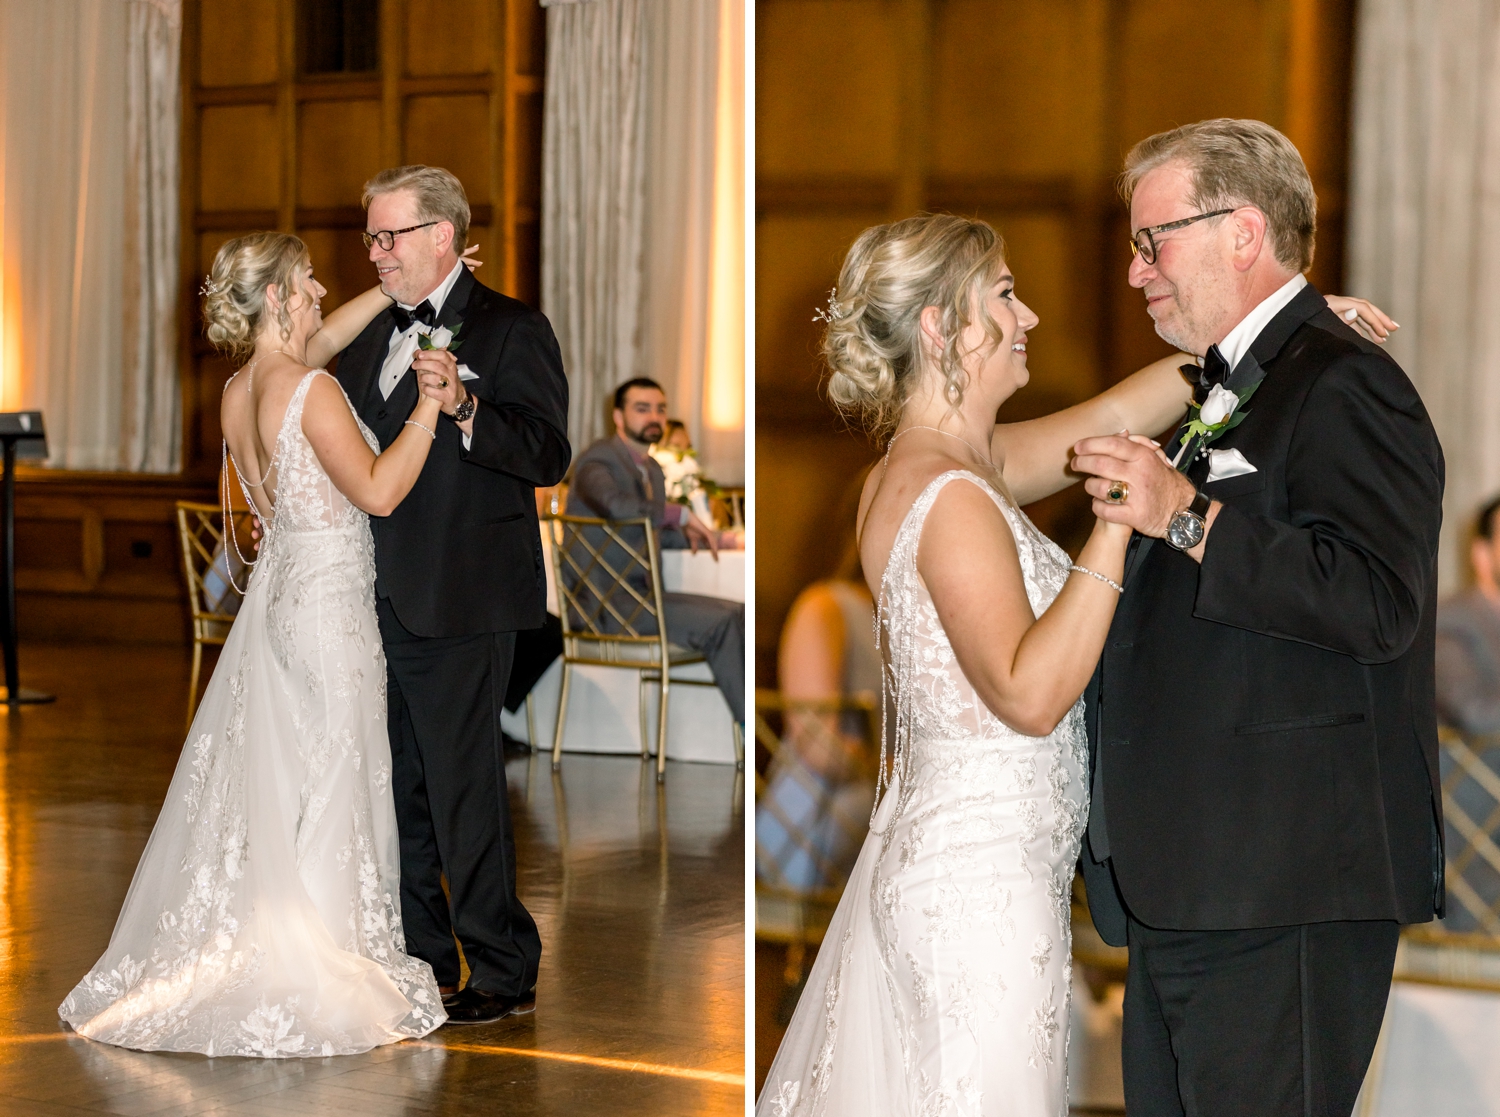 Bride First Dance with Dad at The Cincinnati Club